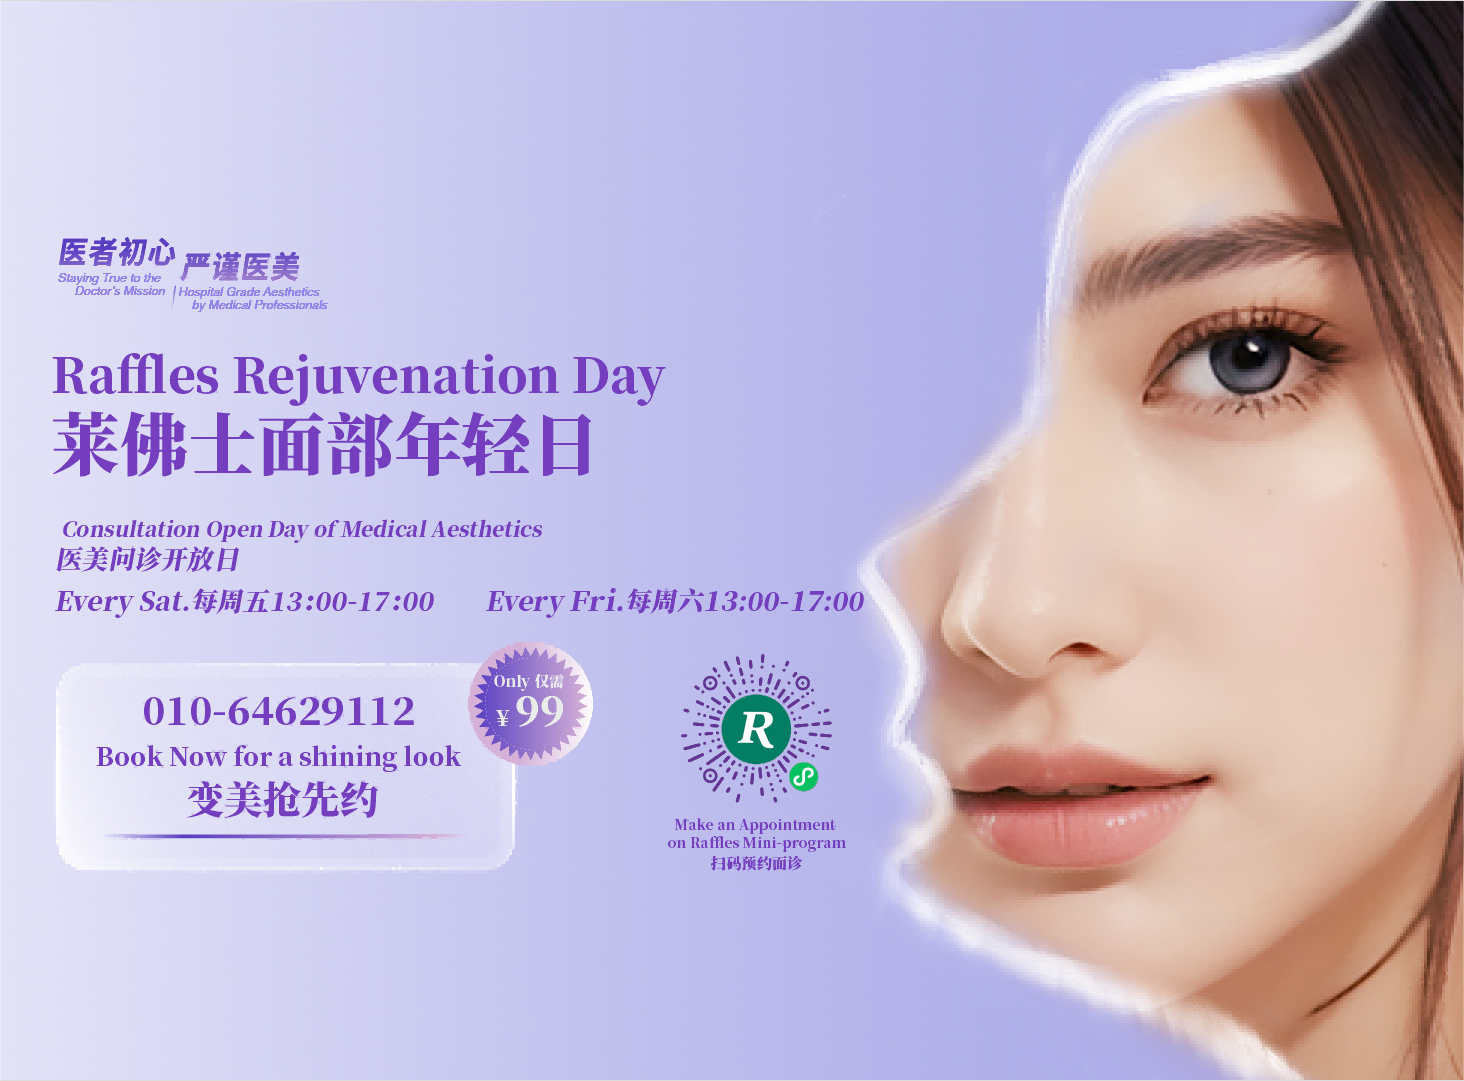 Raffles Hospital Beijing - Special Offer Packages - Raffles Reiuvenation Day